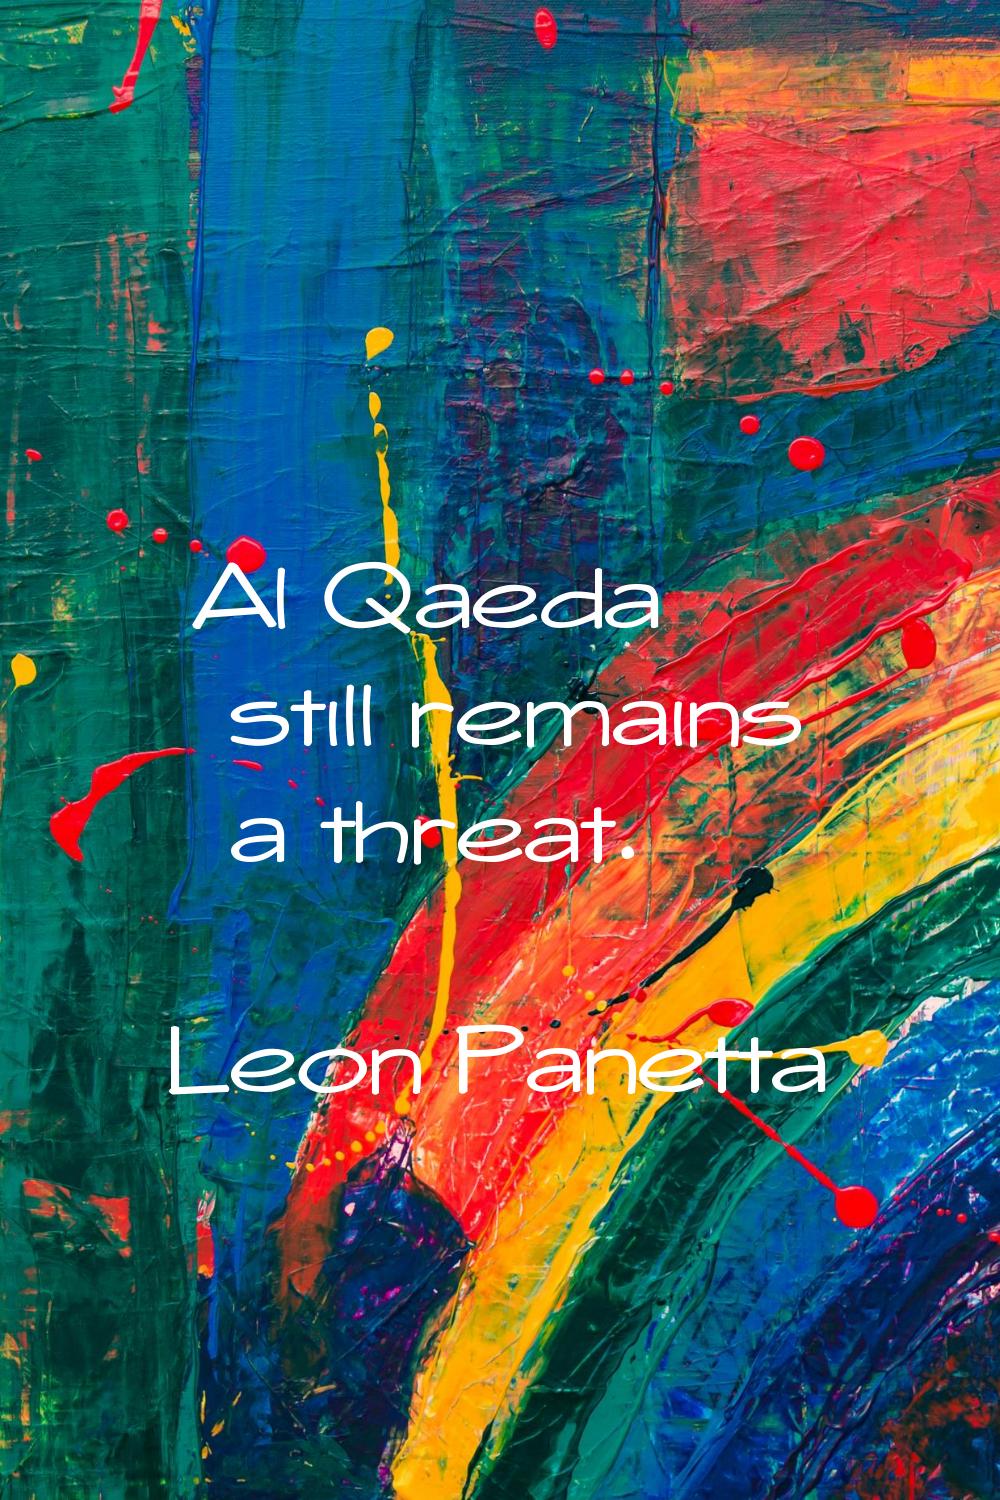 Al Qaeda still remains a threat.